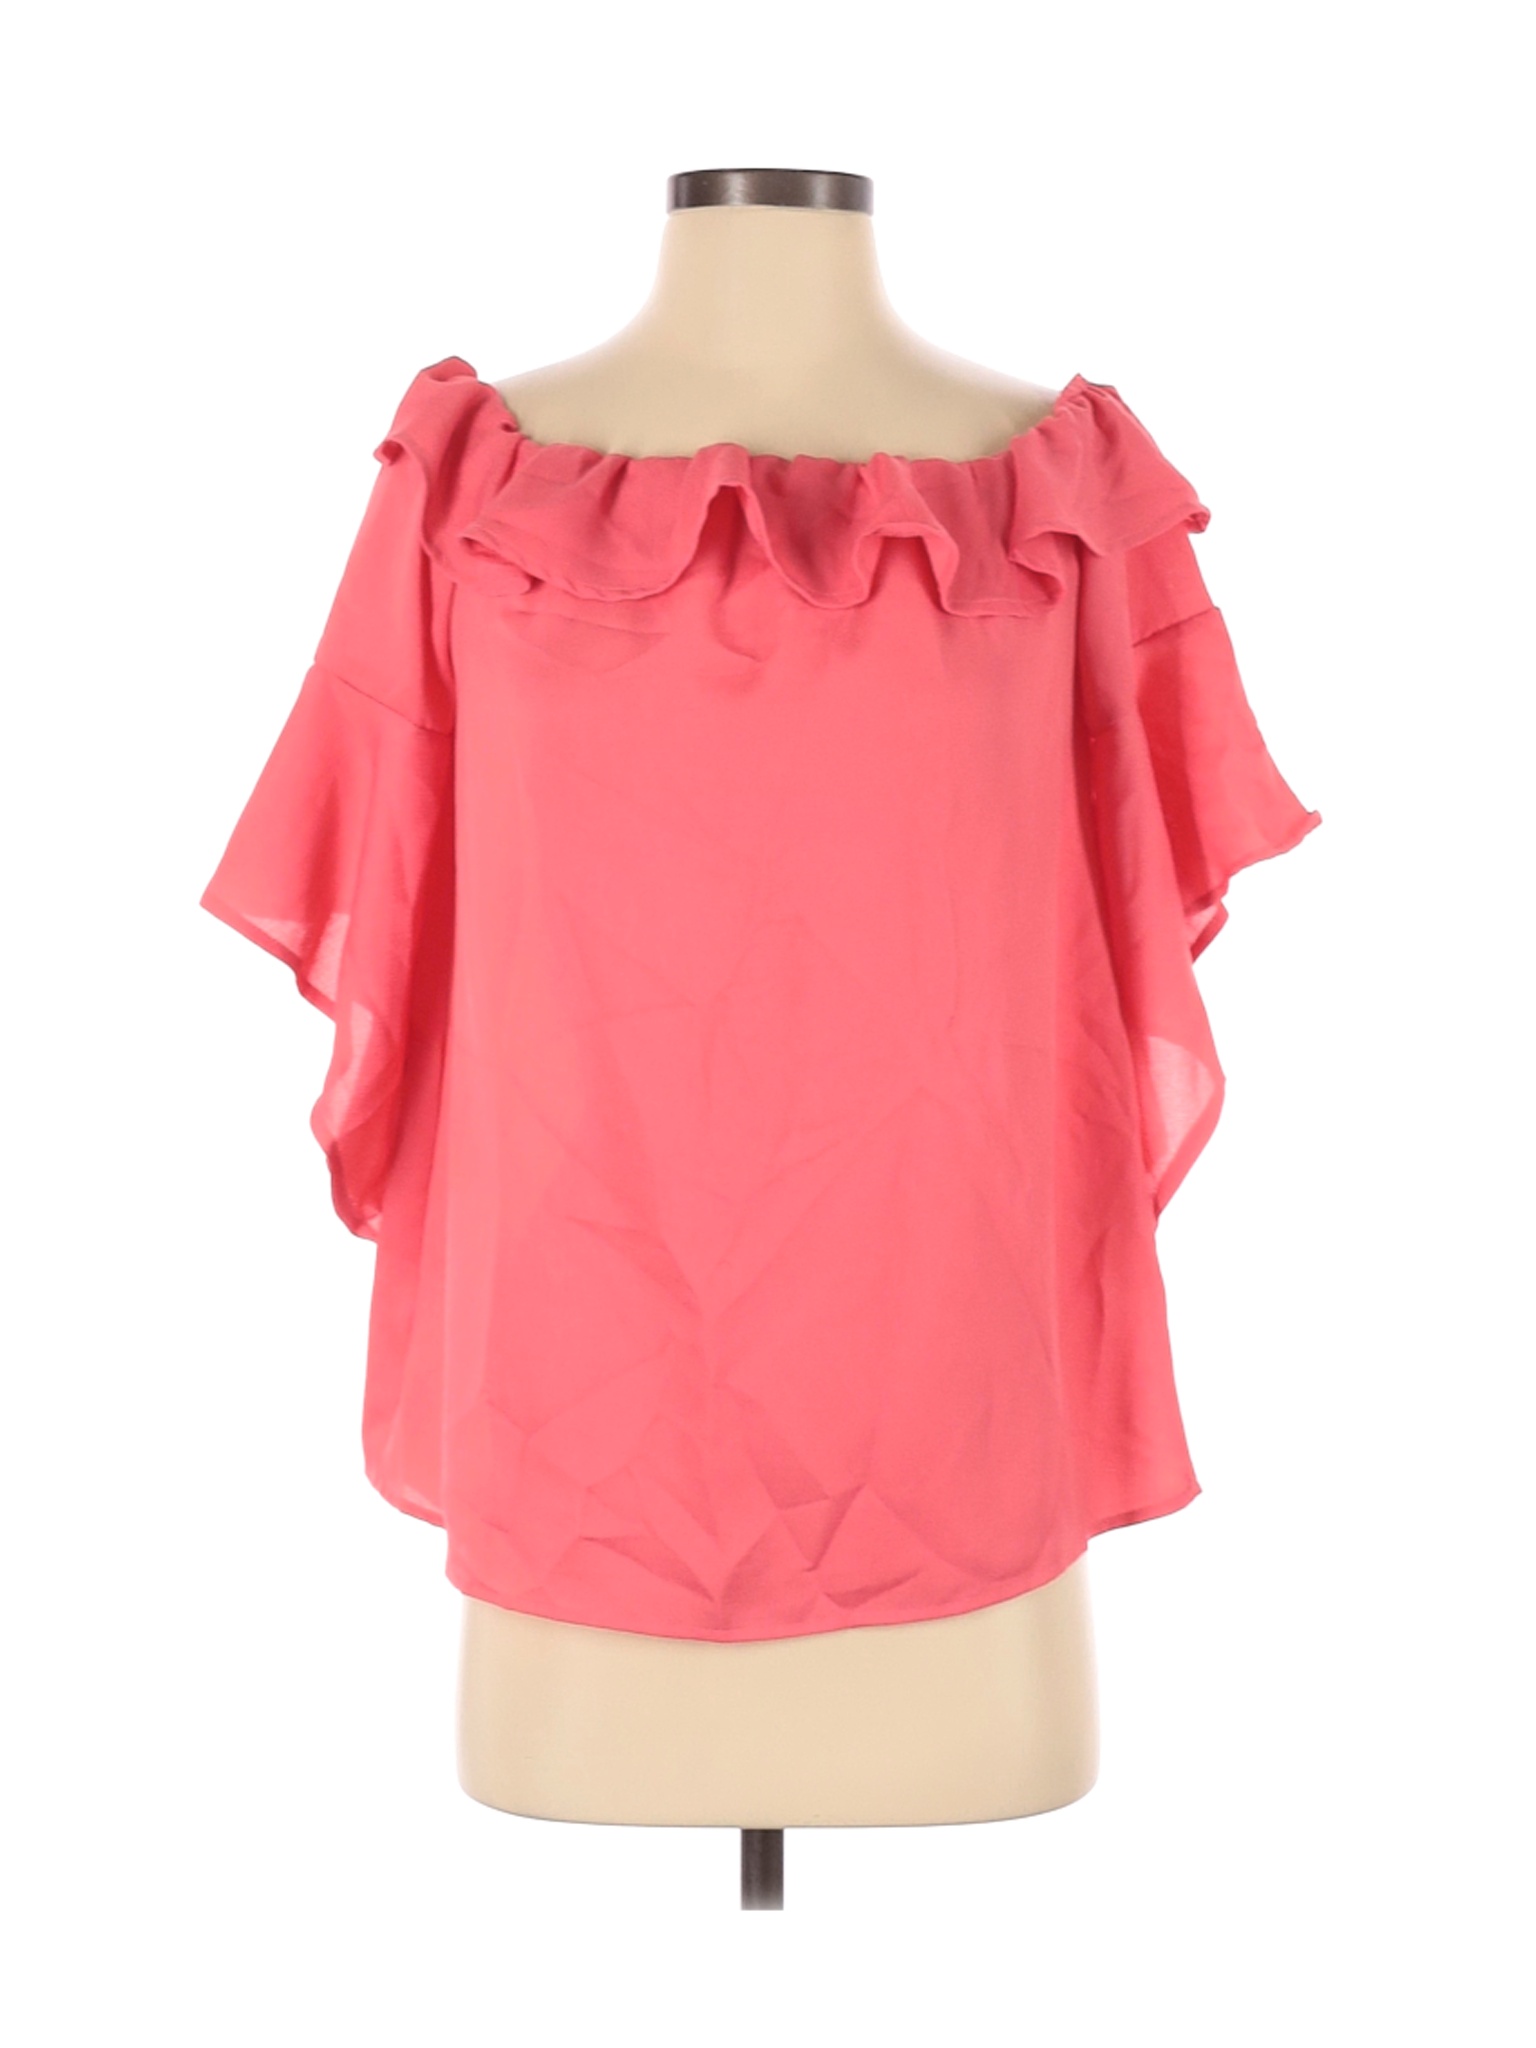 NWT Peach Love Women Pink Short Sleeve Blouse S | eBay